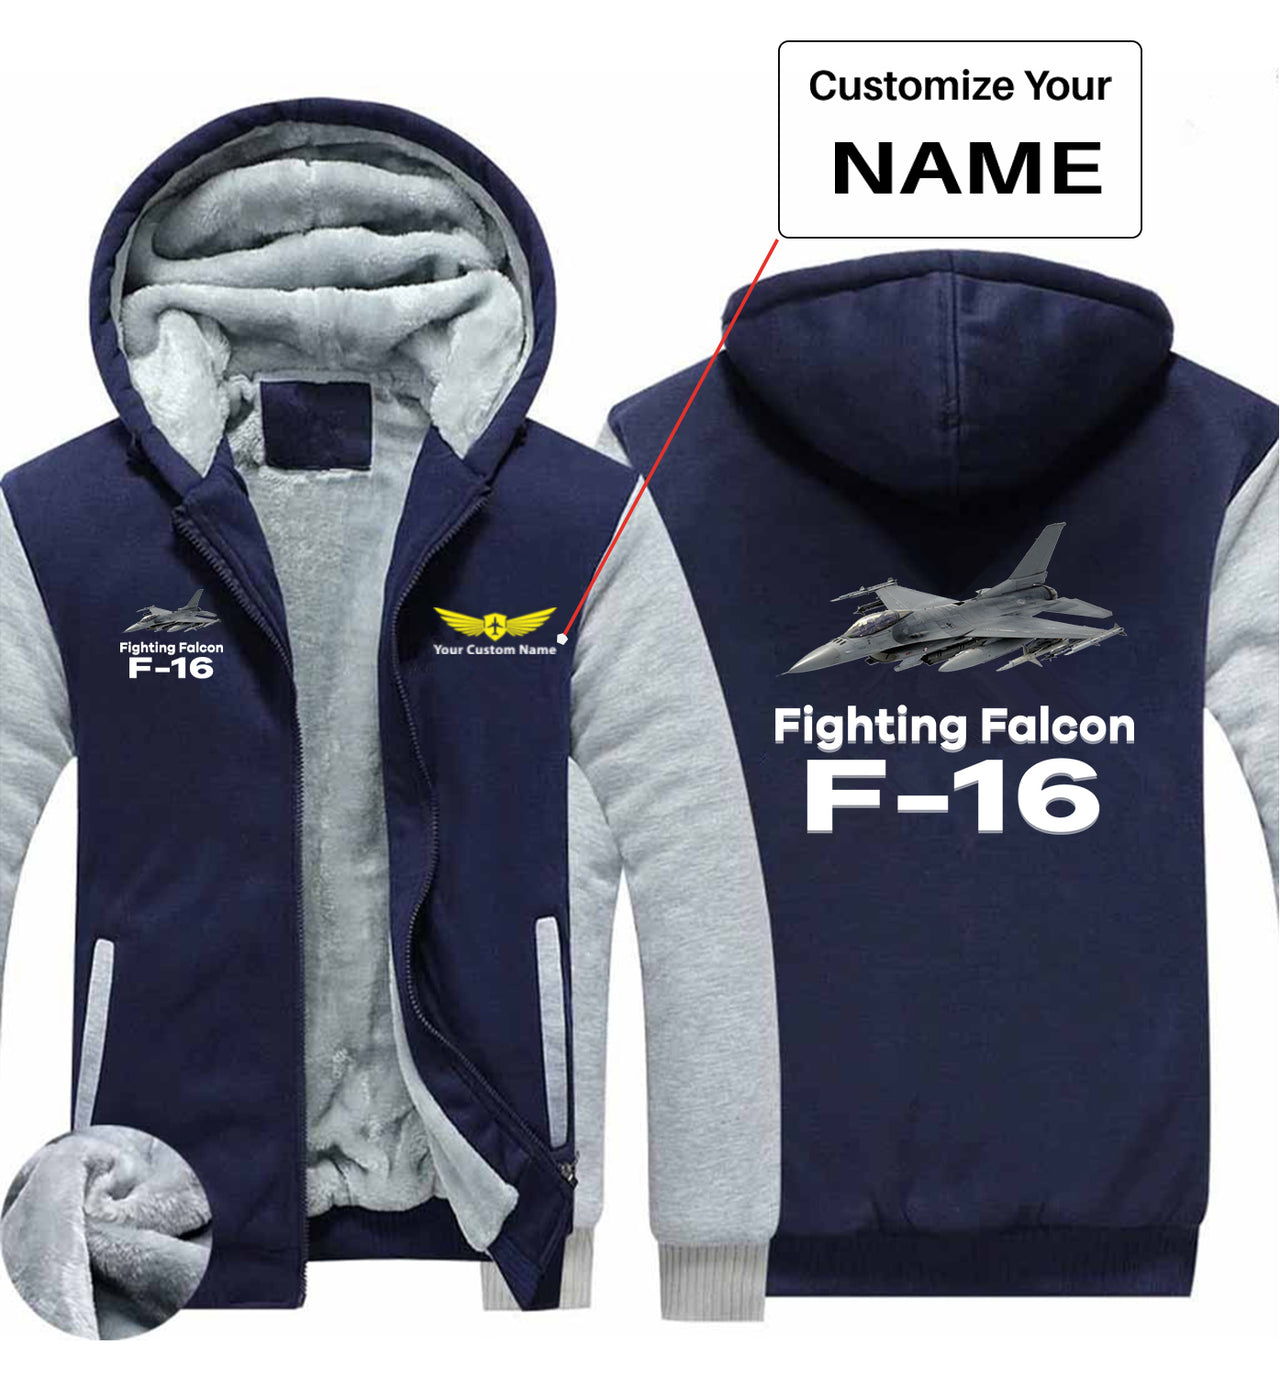 The Fighting Falcon F16 Designed Zipped Sweatshirts